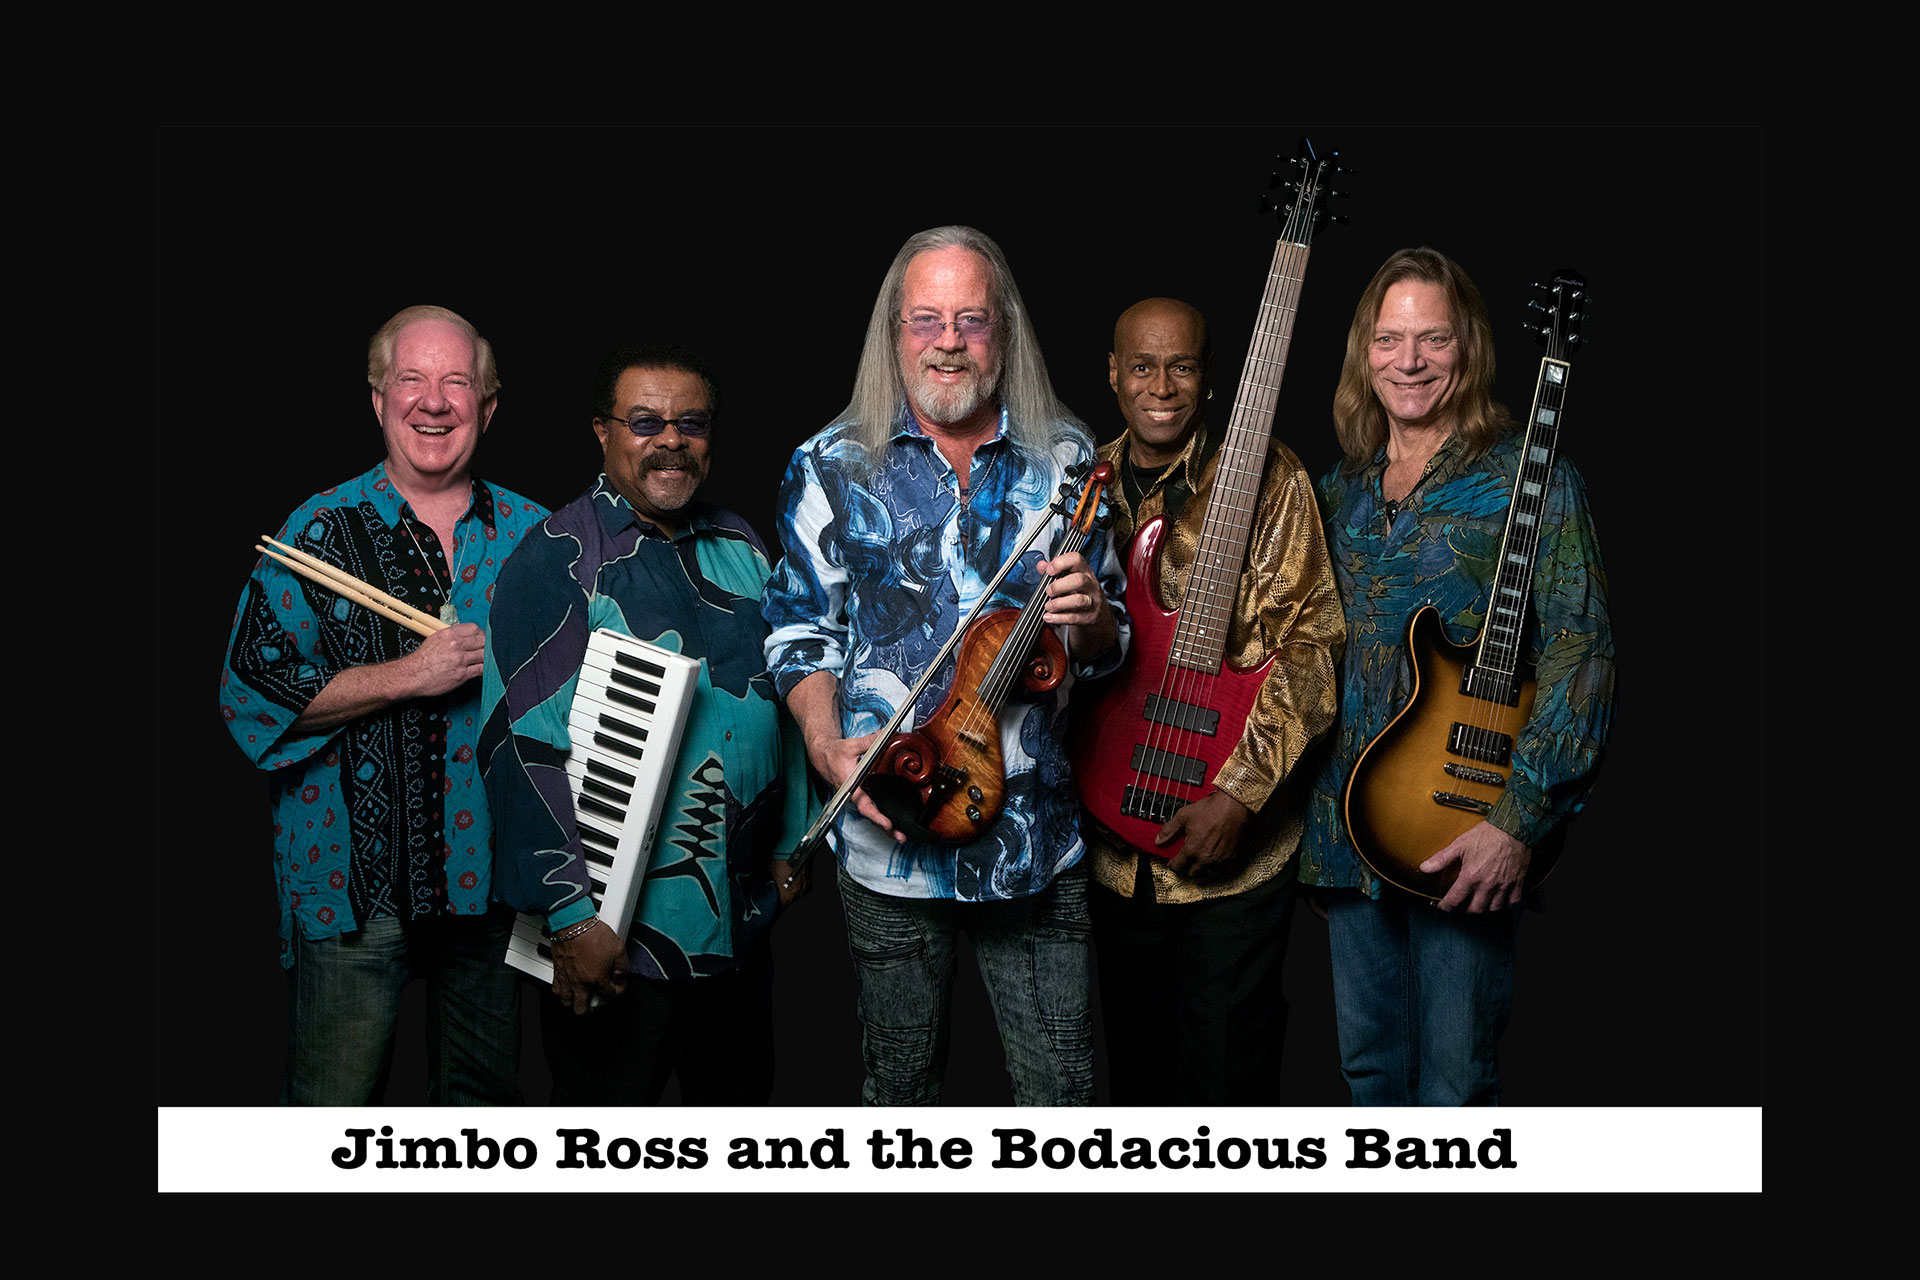 Jimbo Ross and the Bodacious Band